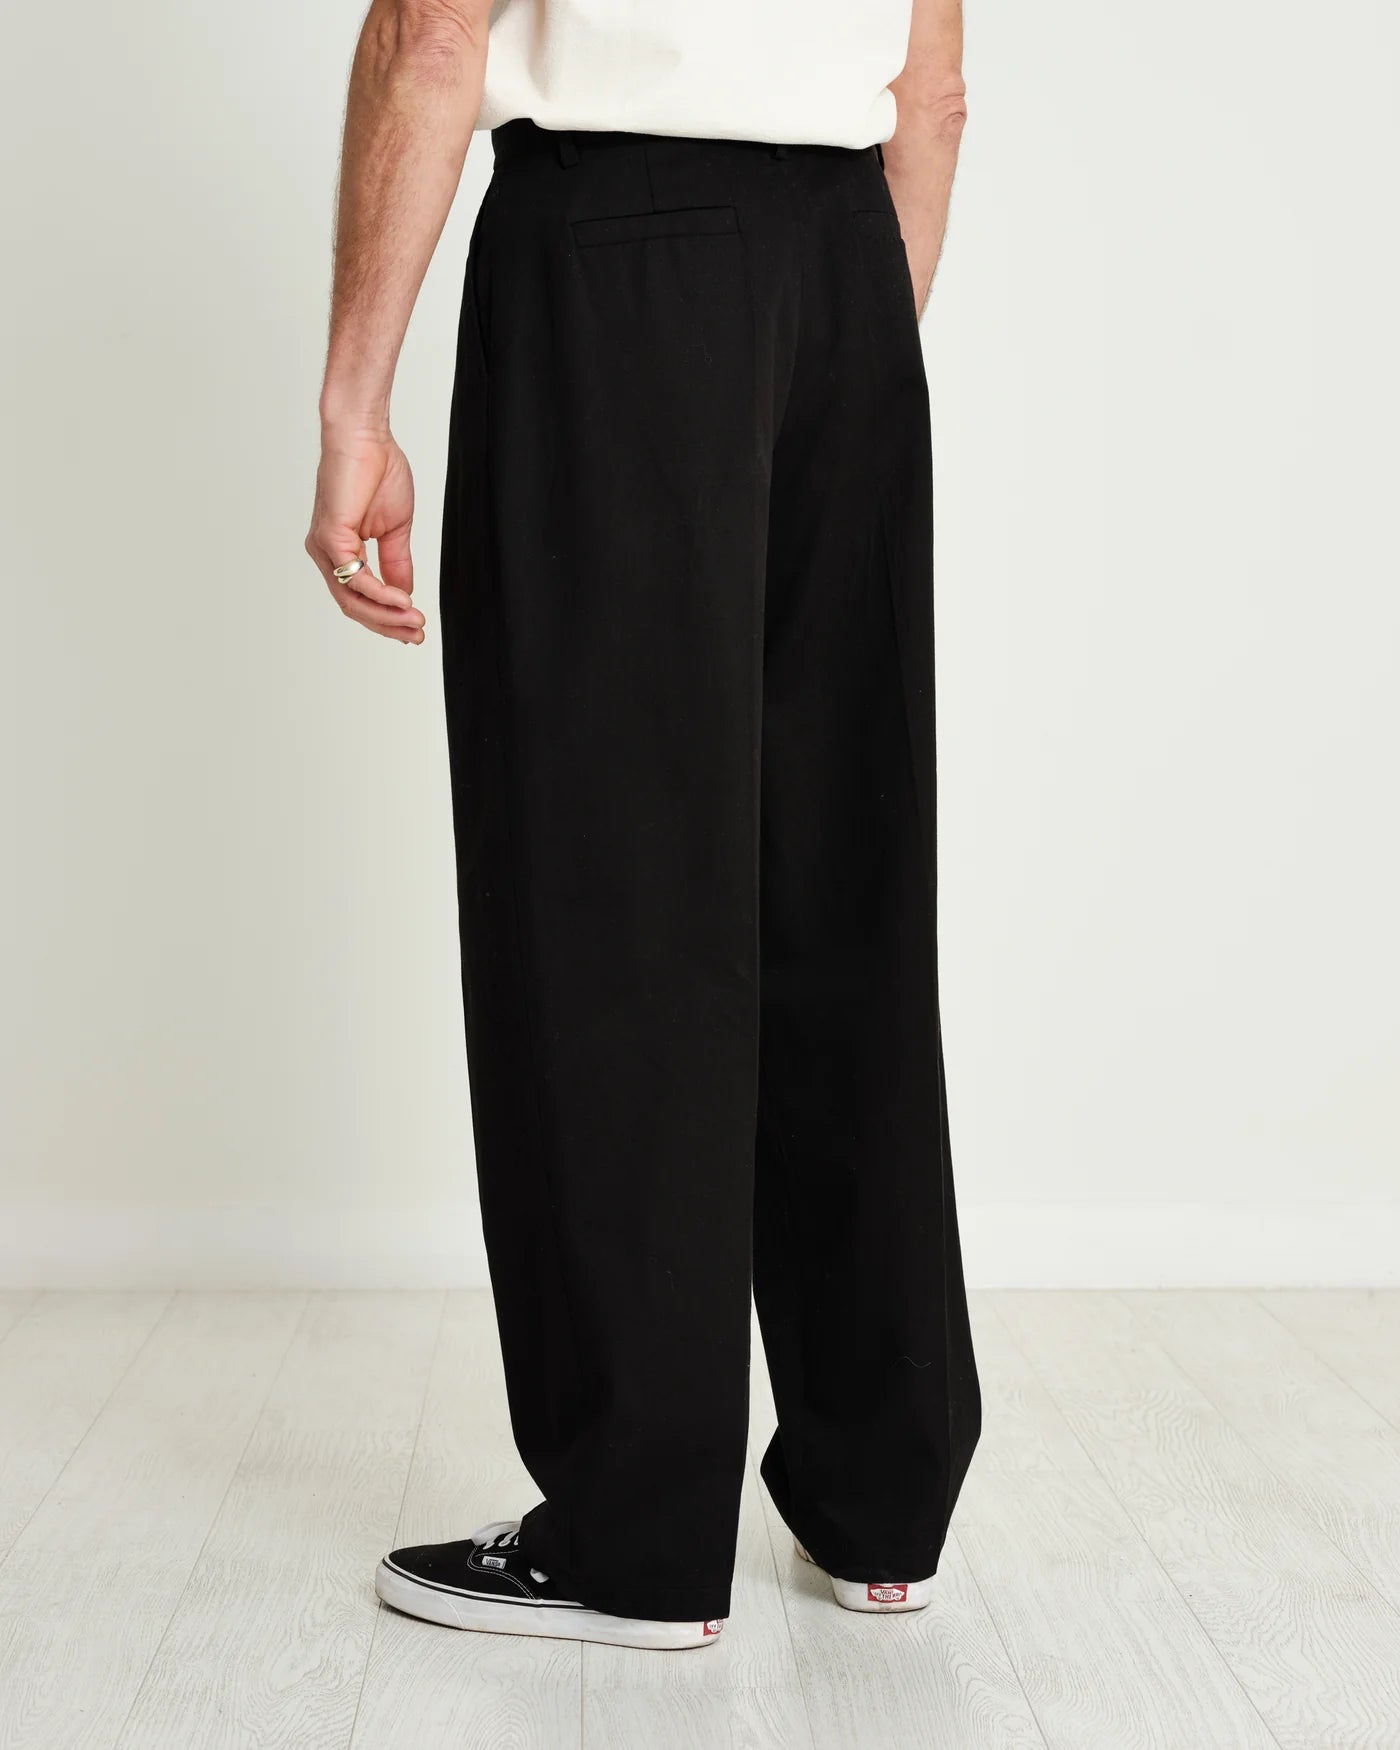 WAX LONDON CLOTHING Milo Wider Cut Trouser